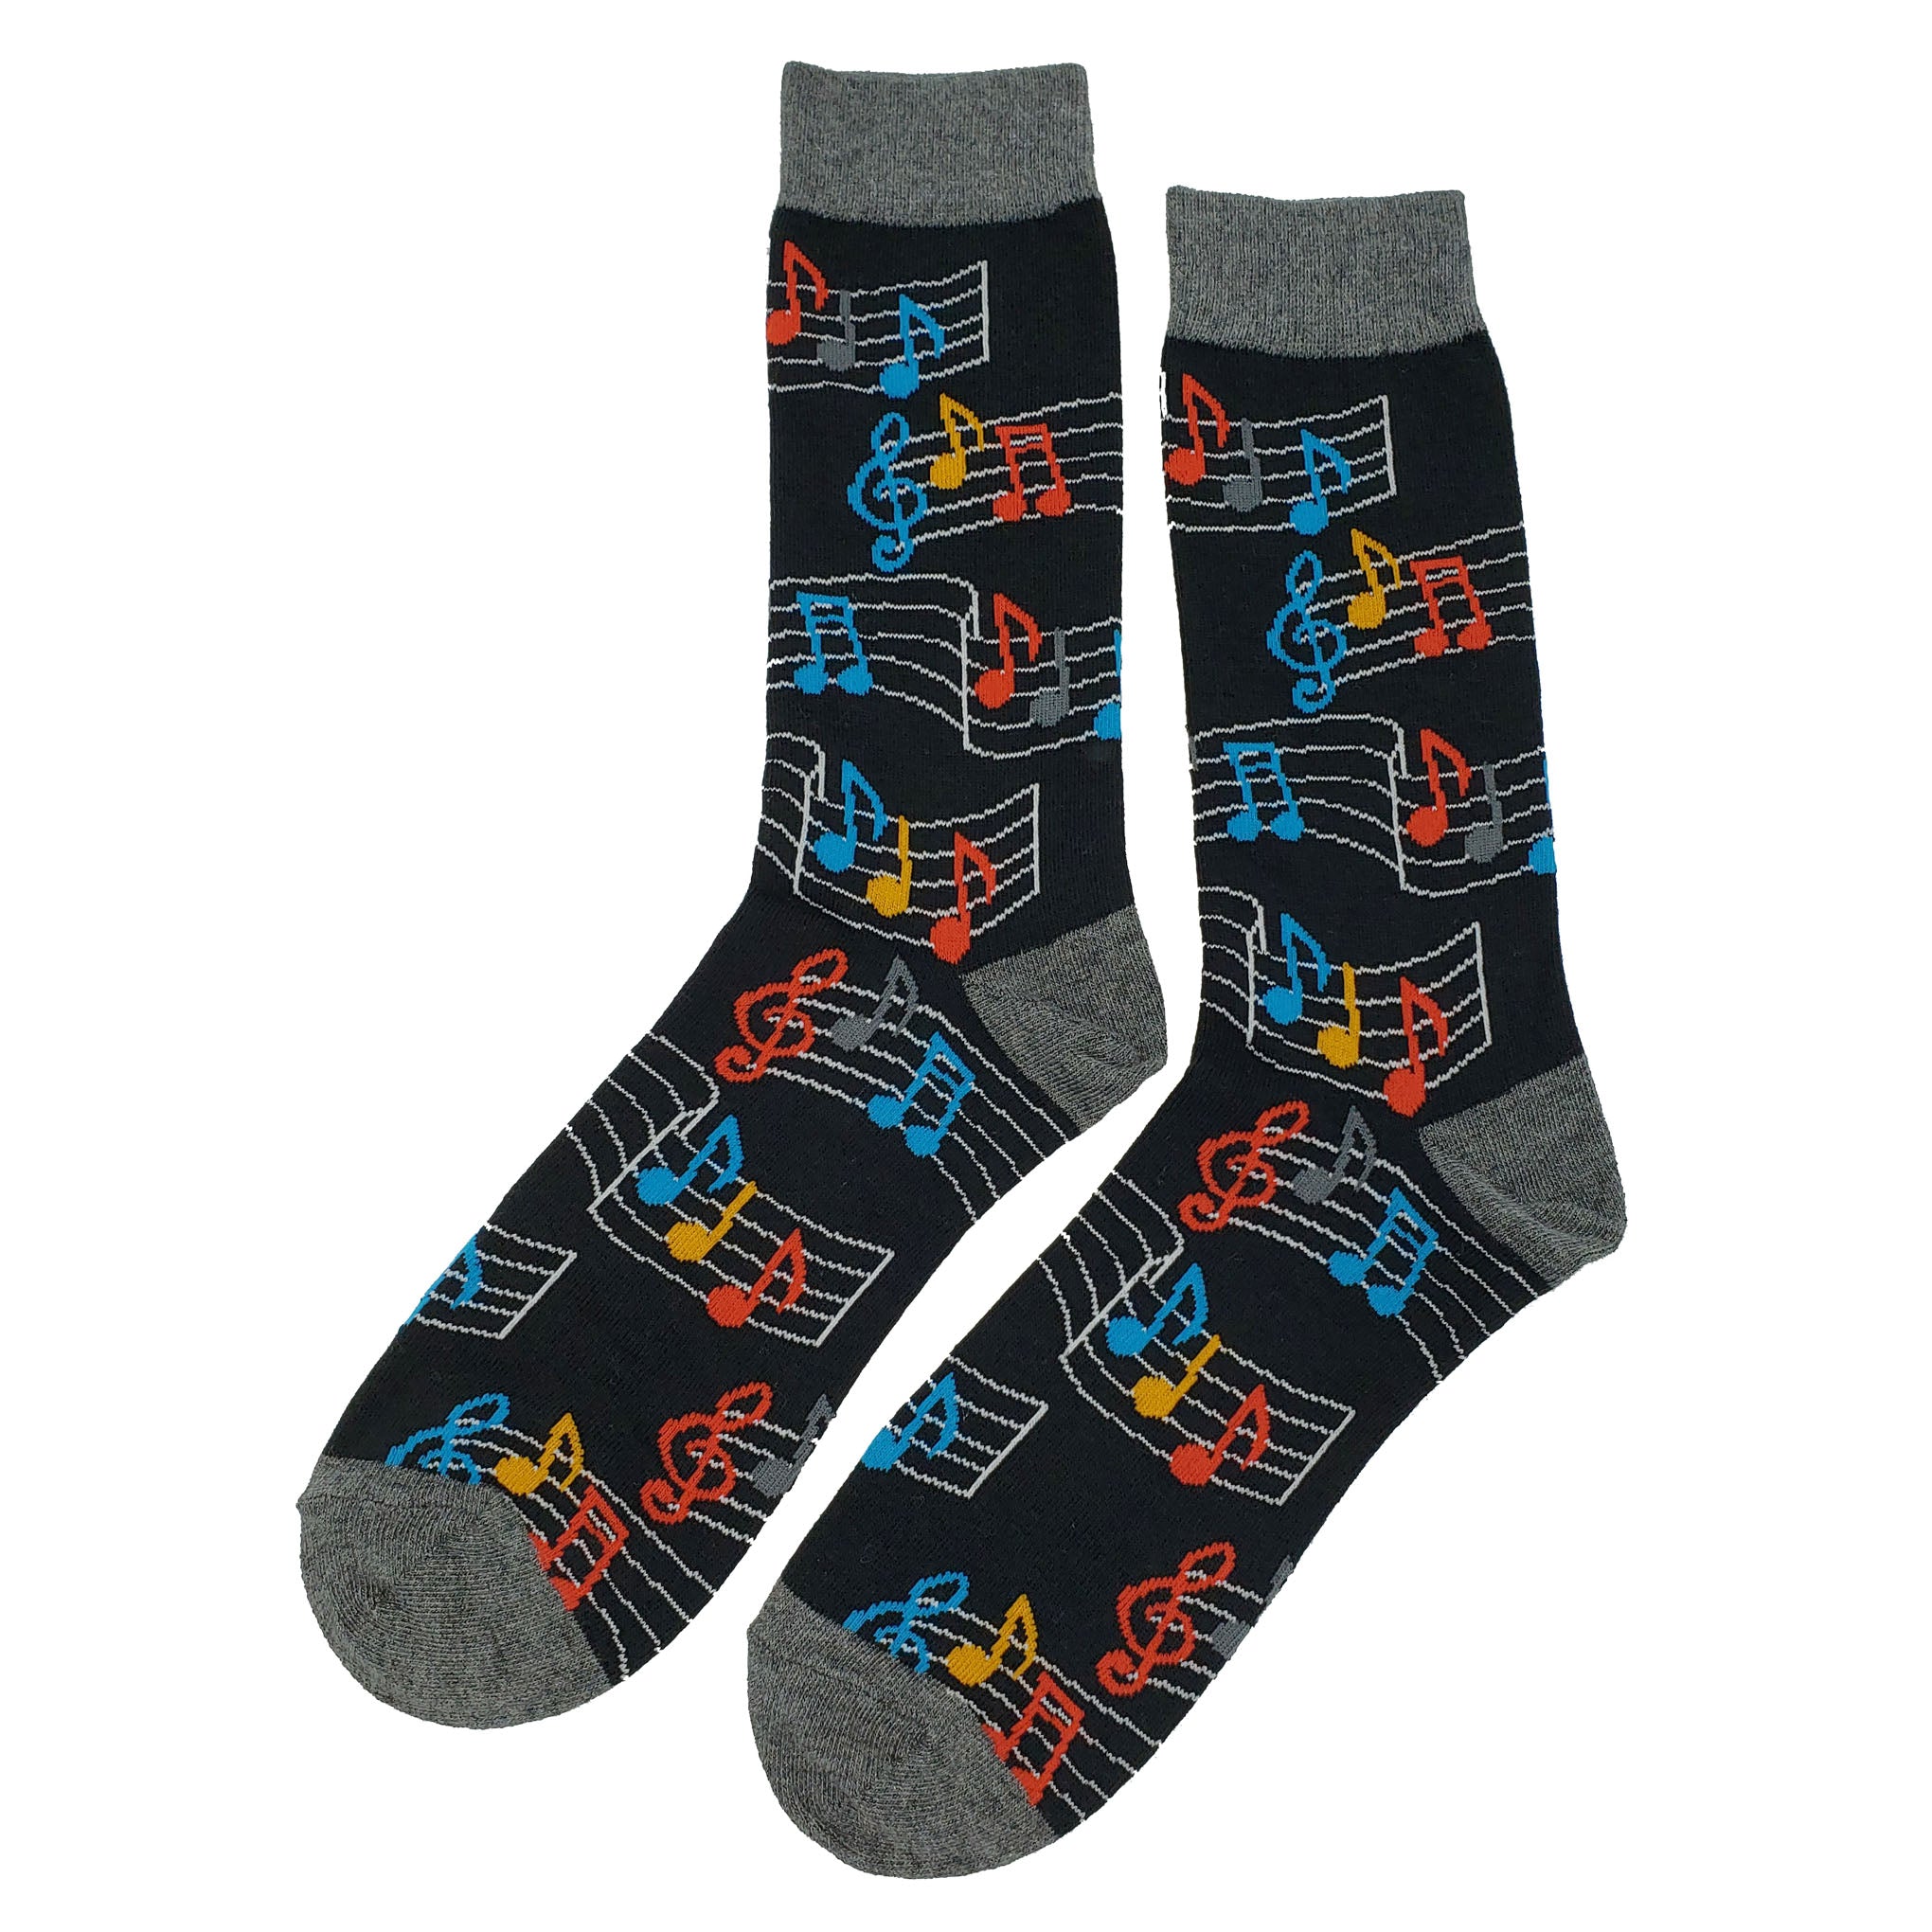 Music Note Socks - Fun and Crazy Socks at Sockfly.com